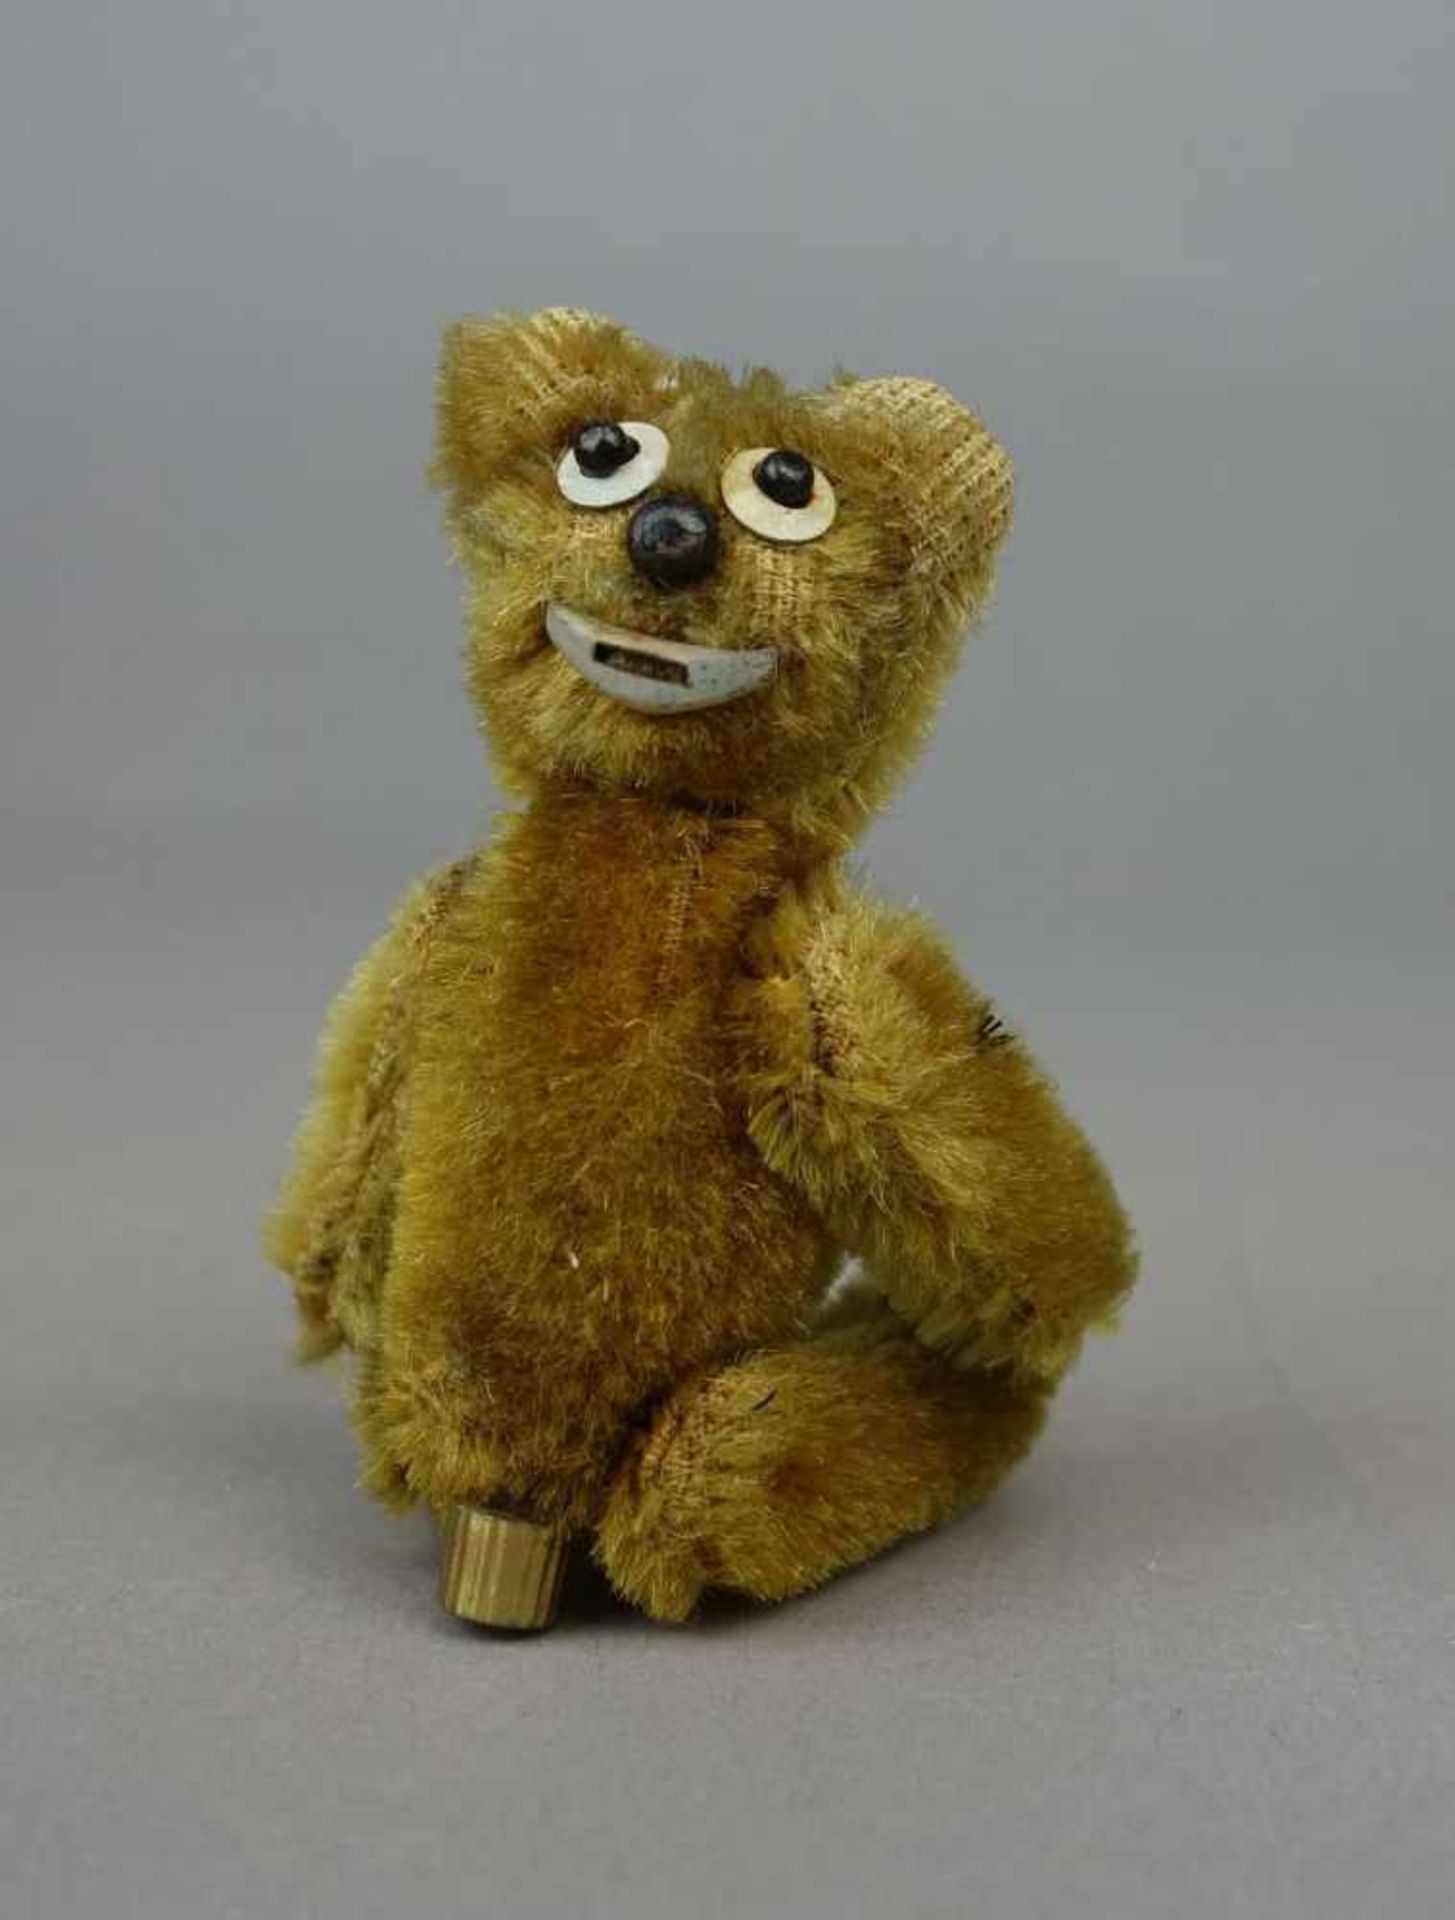 SPIELZEUG / TEDDYBÄR: JANUS-TEDDY SCHUCO / teddy bear, 1950er Jahre, Manufaktur Schuco / Nürnberg. - Image 2 of 5